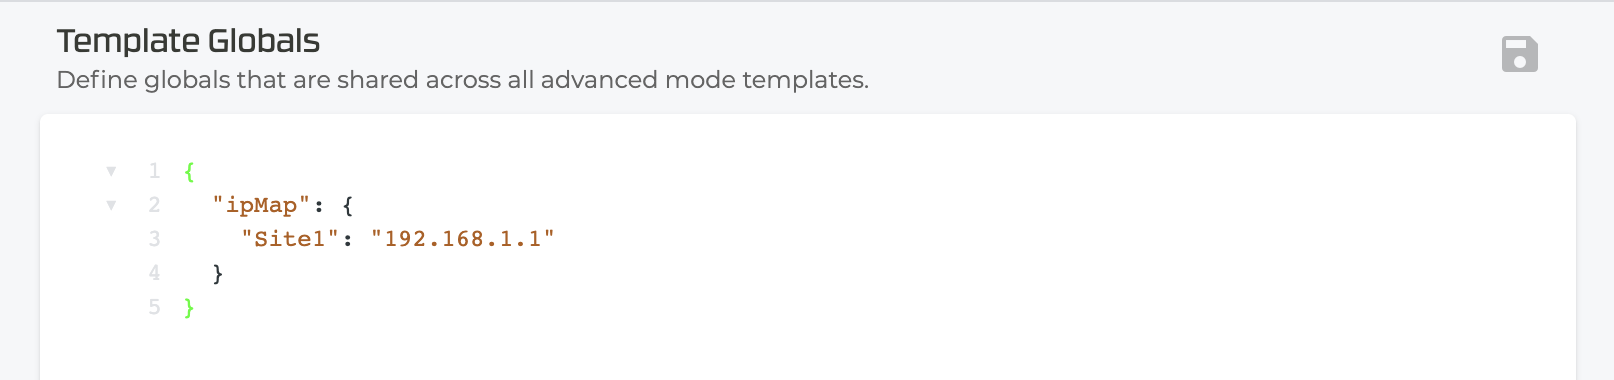 templates_generate_btn